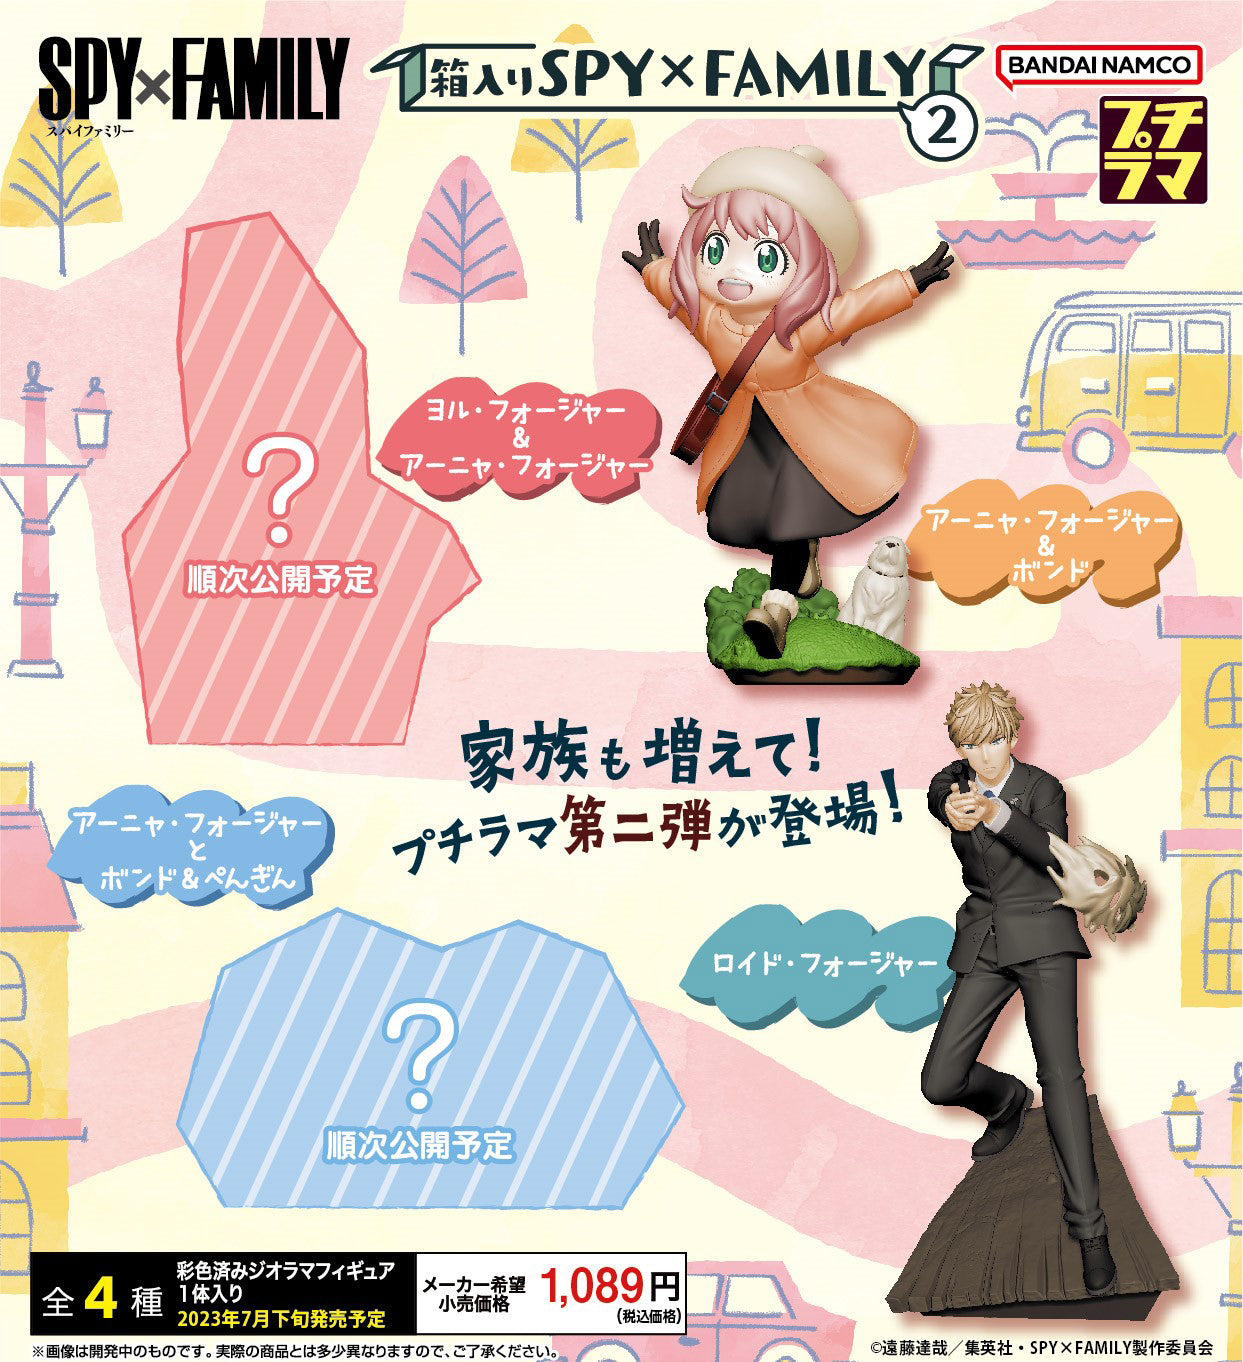 Petitrama Series "SPY x FAMILY" SPY x FAMILY in the Box 2